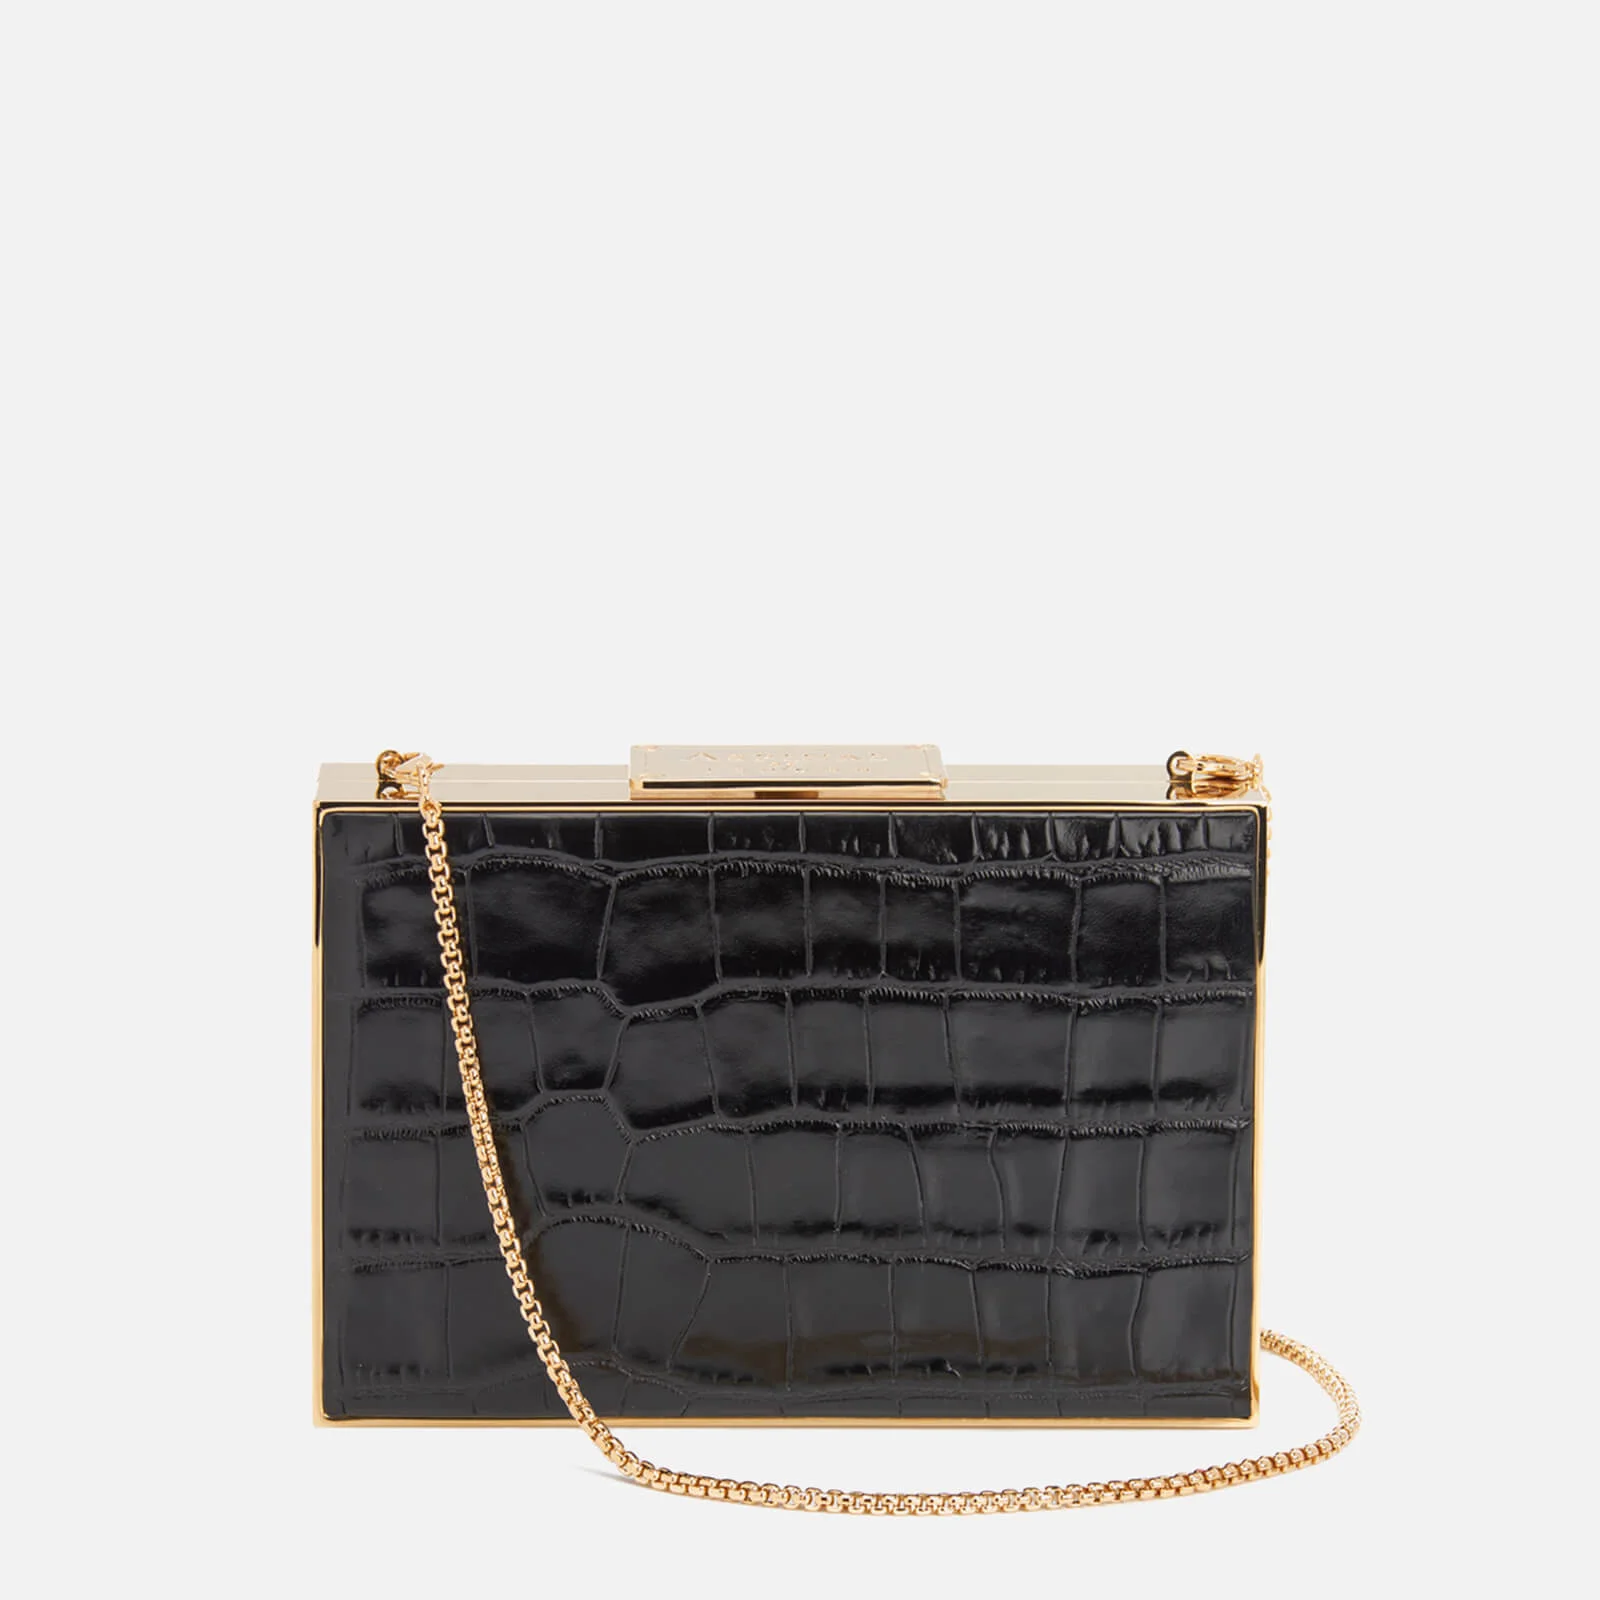 Aspinal of London Women's Scarlett Box Clutch Bag - Black Image 1